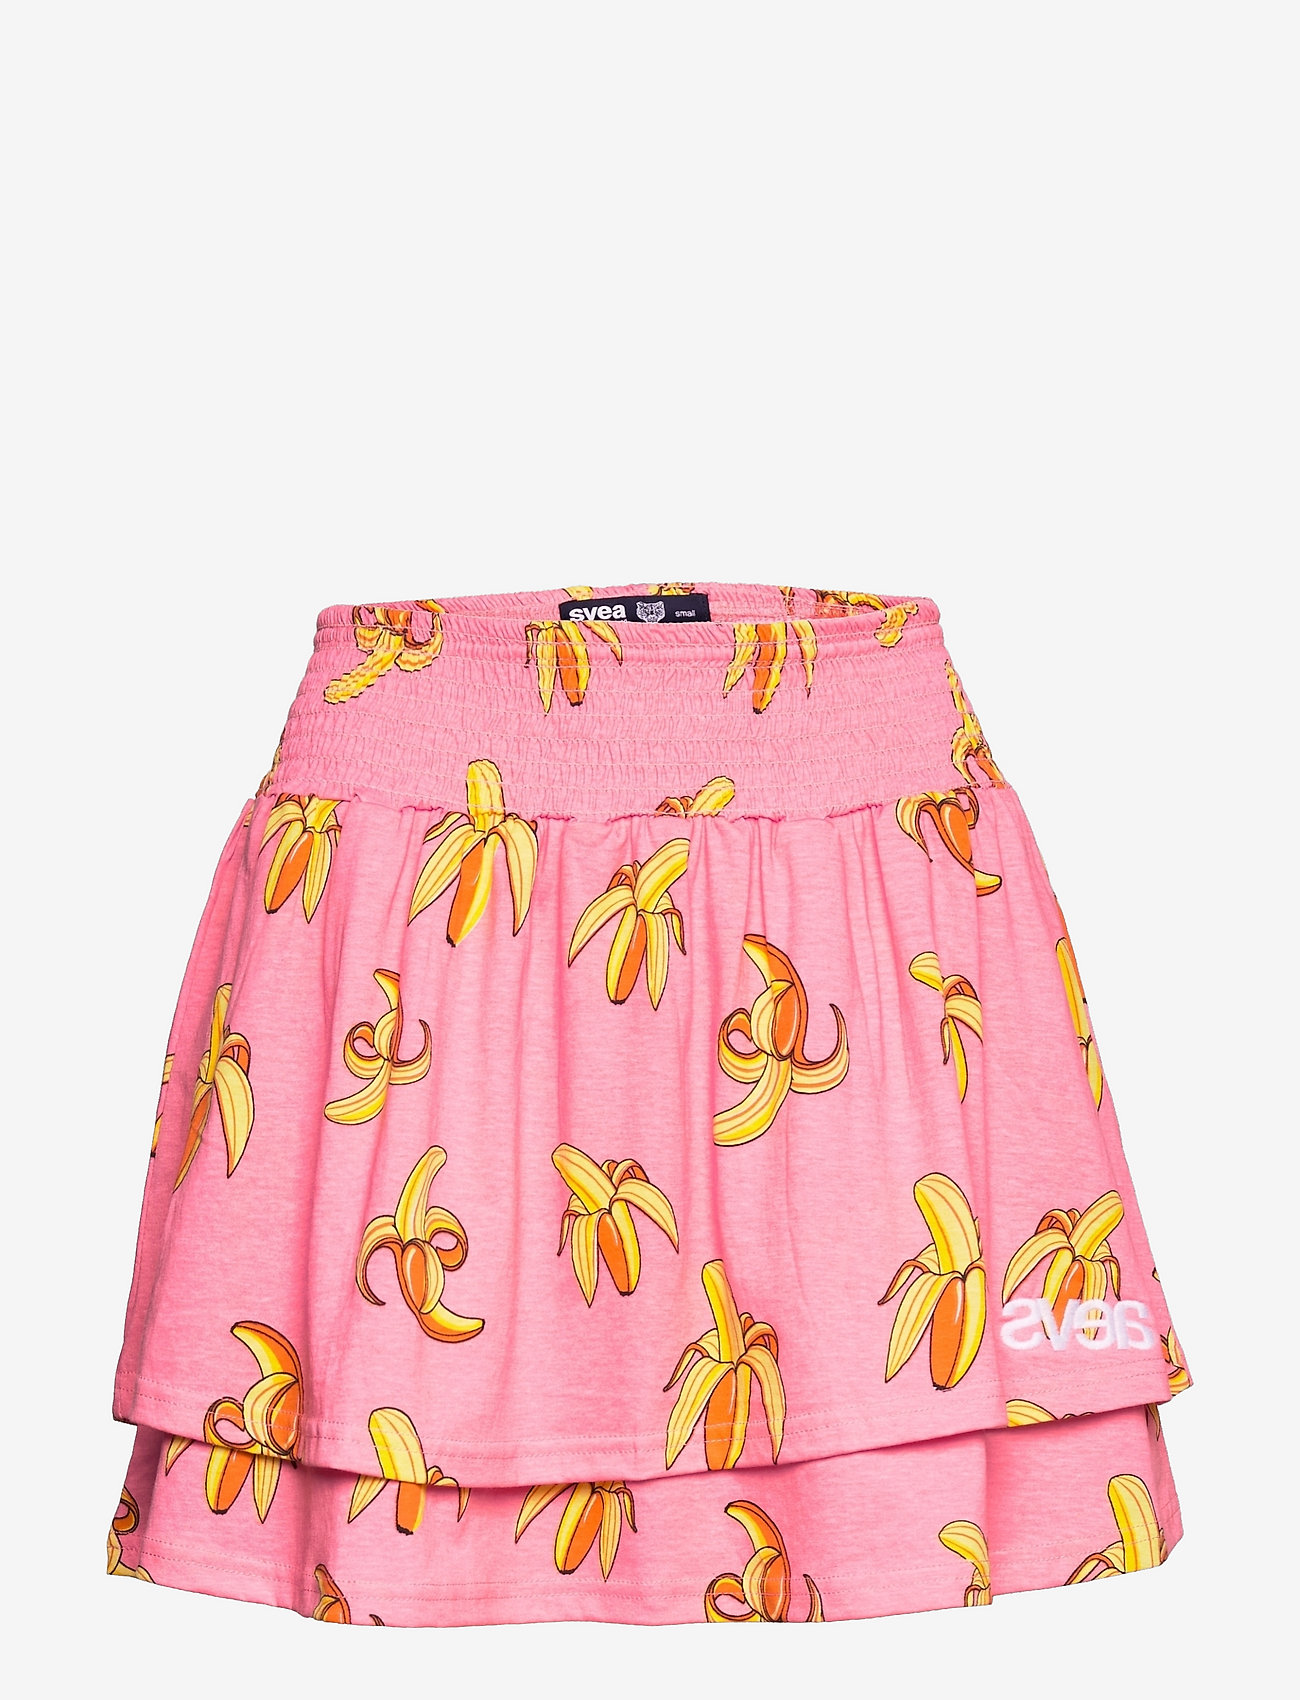 Svea - Flounce Mini Skirt - kurze röcke - pink banana - 0